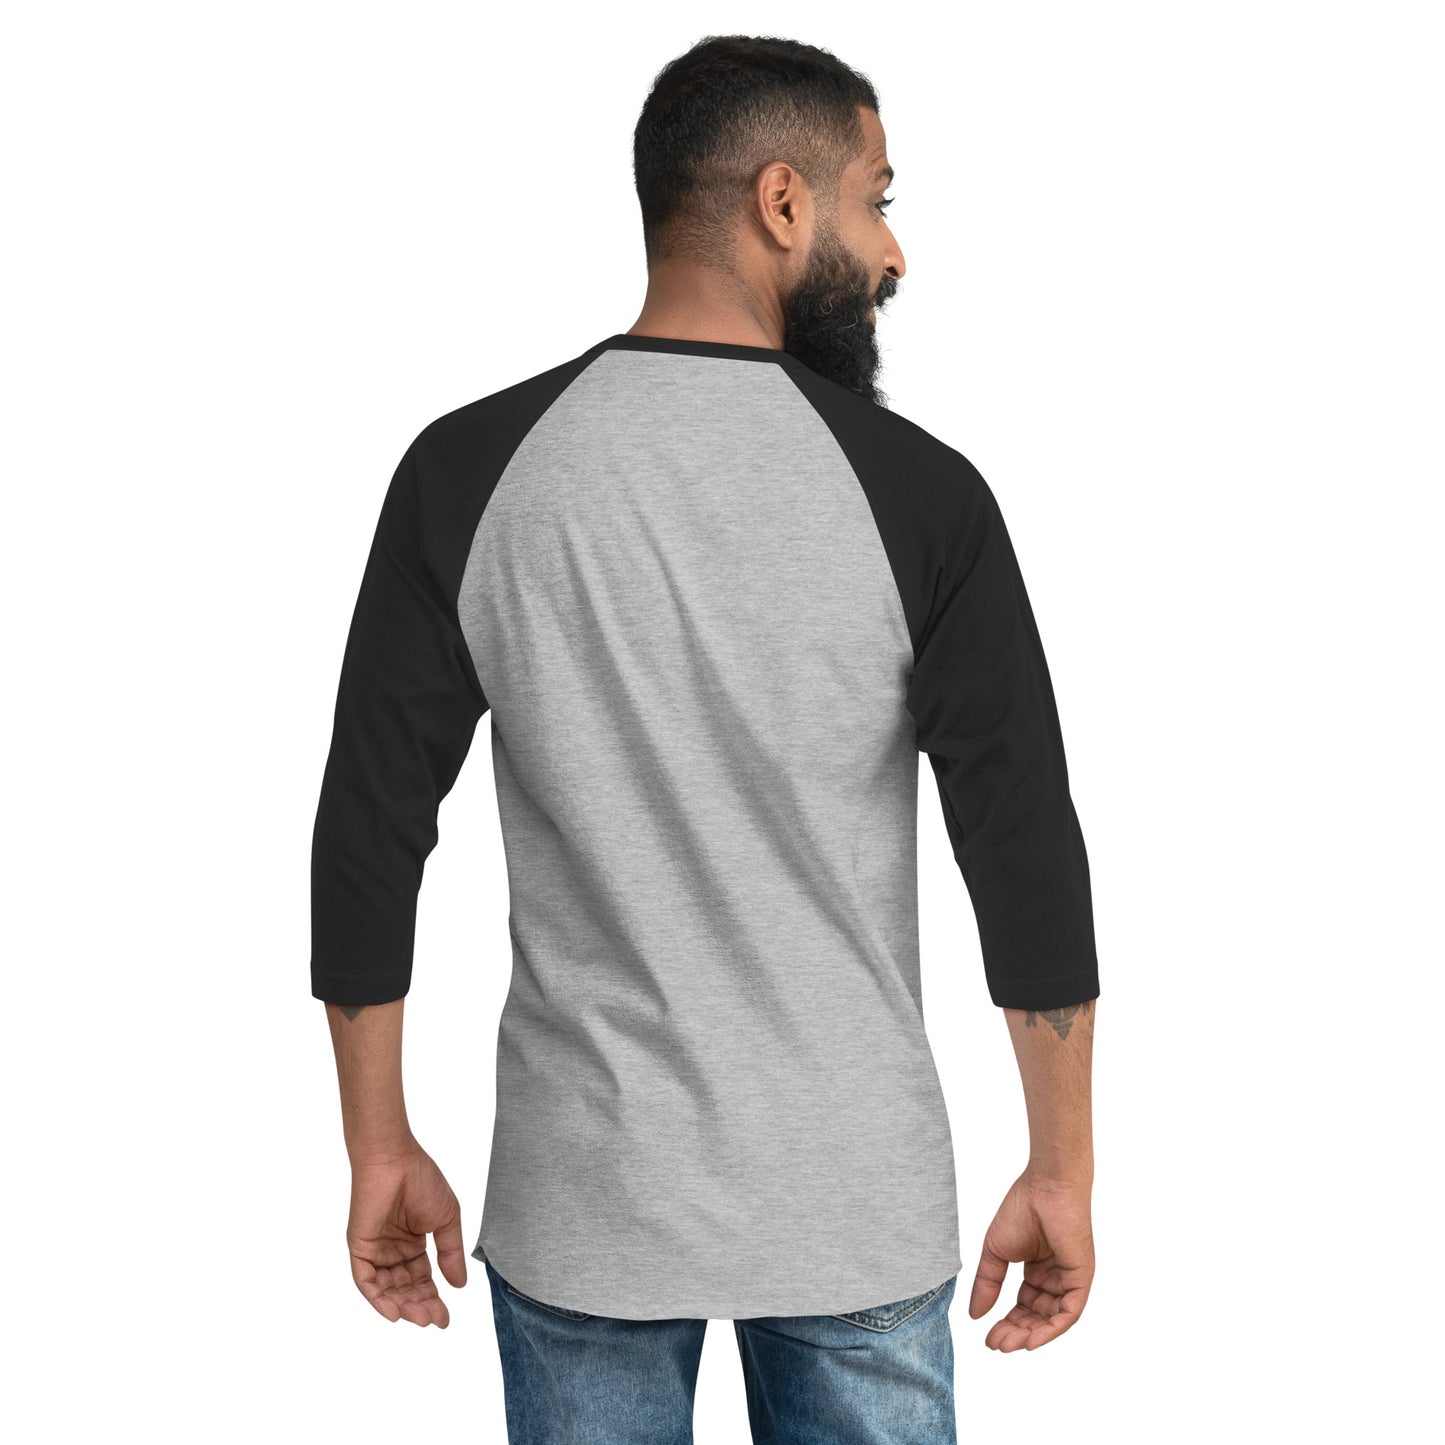 "Only on Main Street" (Local Businesses) 3/4 Sleeve Raglan Shirt